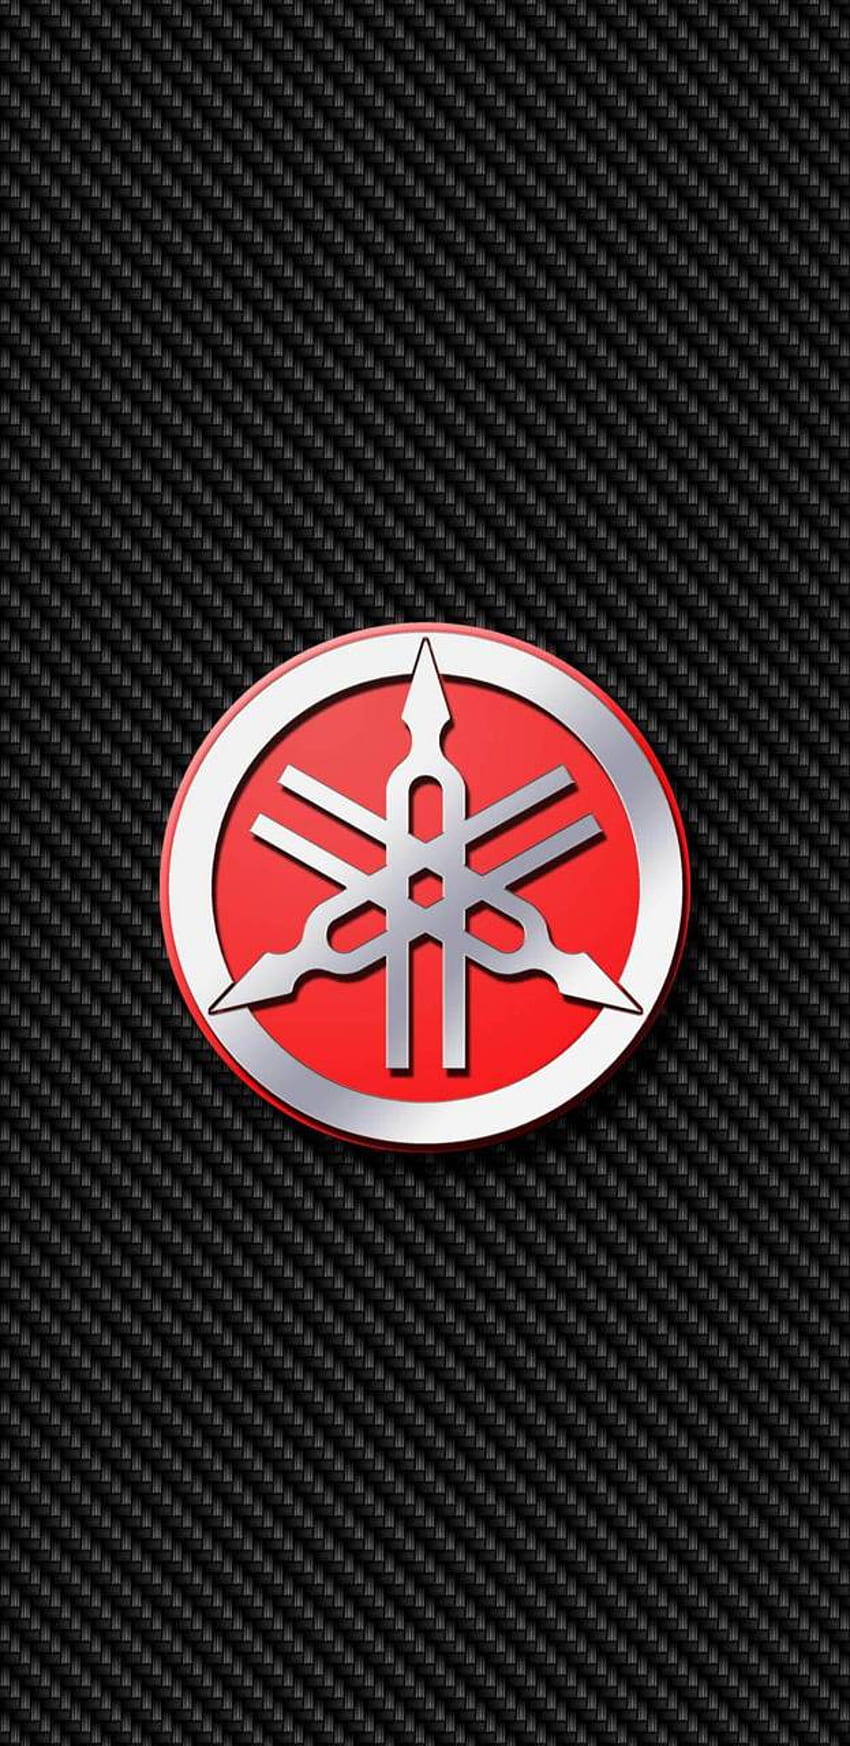 R15 Wheel Center Cap Emblem 2-15/16